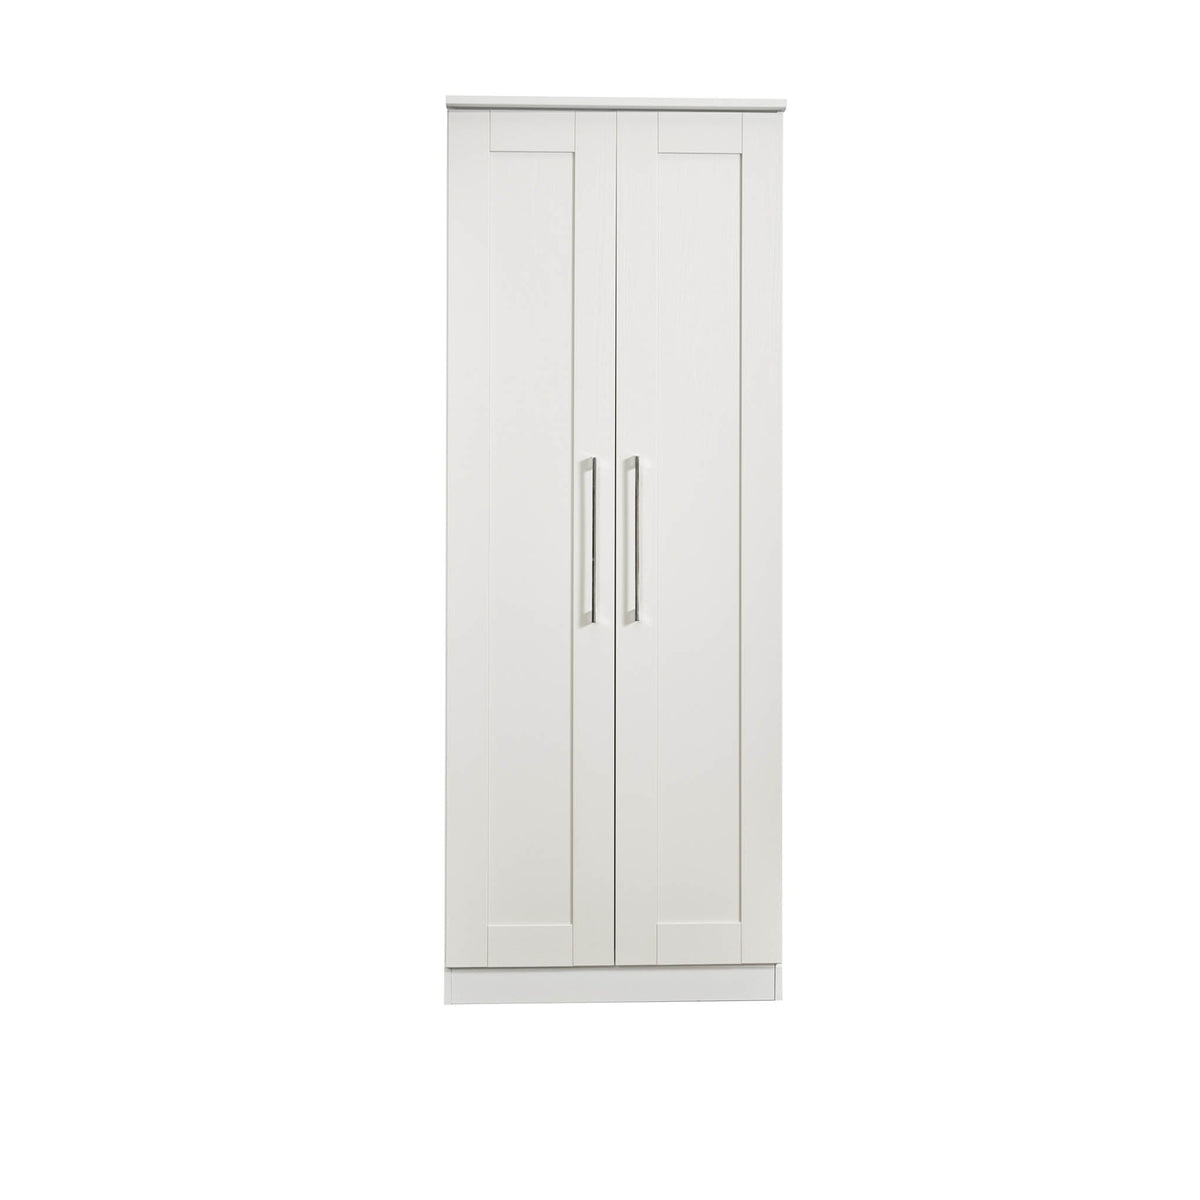 Bellamy White  Door Double Wardrobe from Roseland